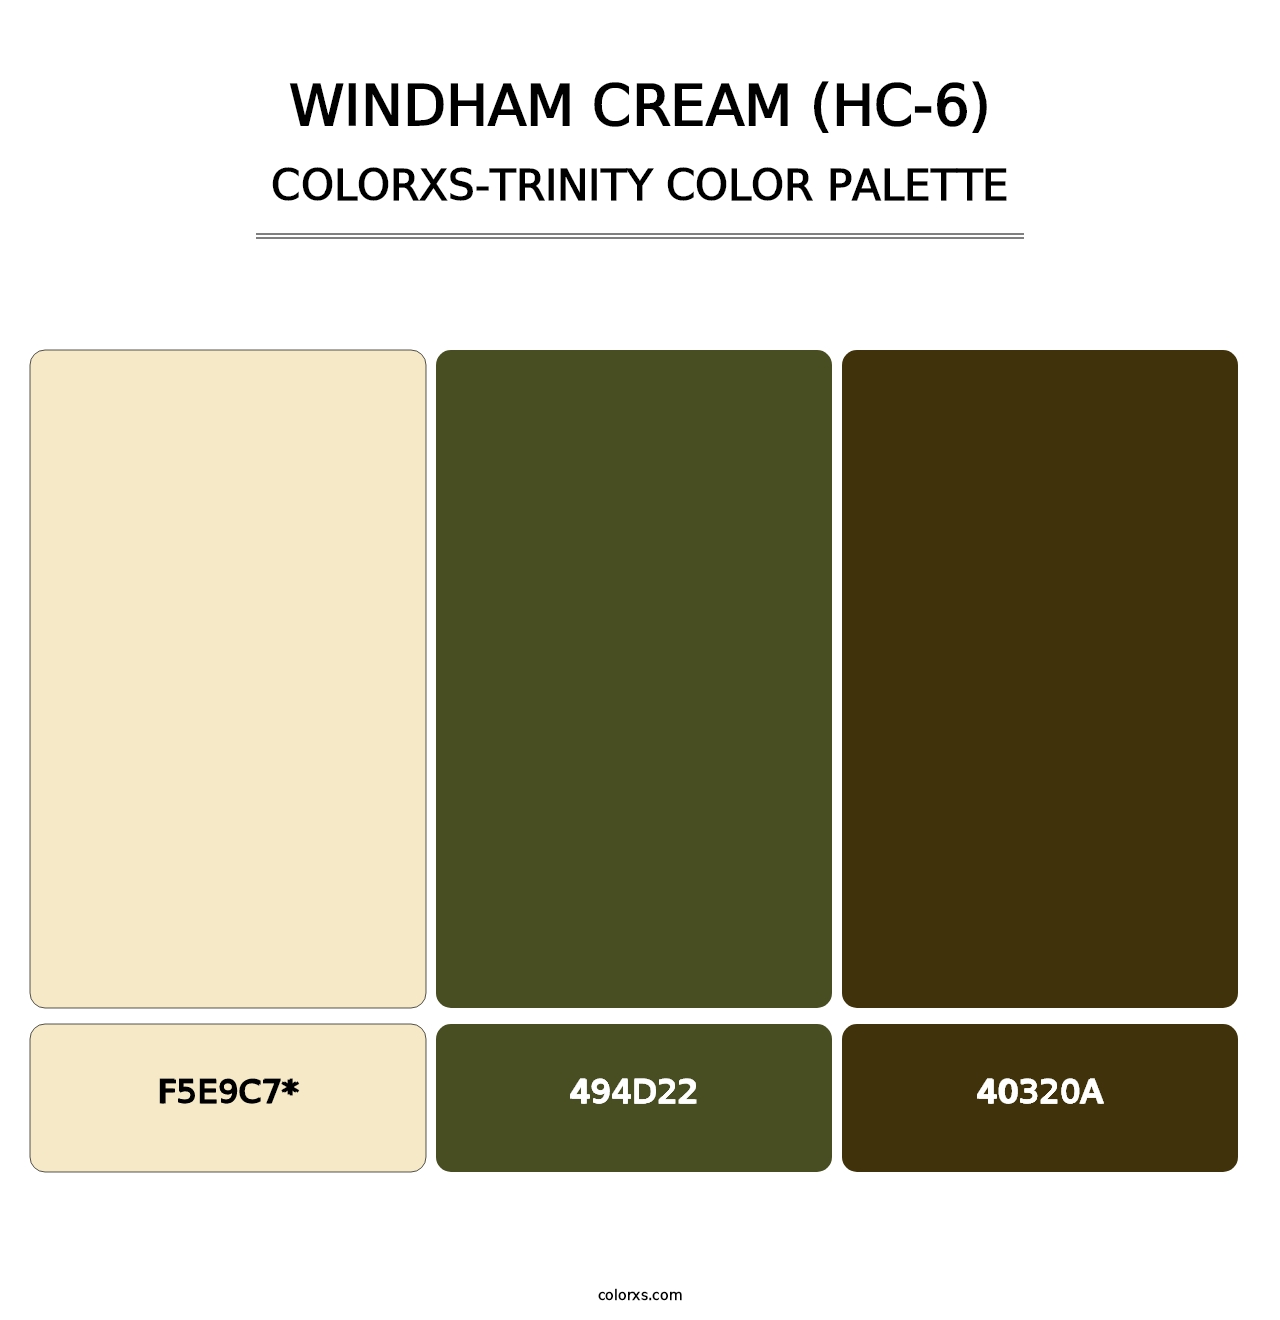 Windham Cream (HC-6) - Colorxs Trinity Palette